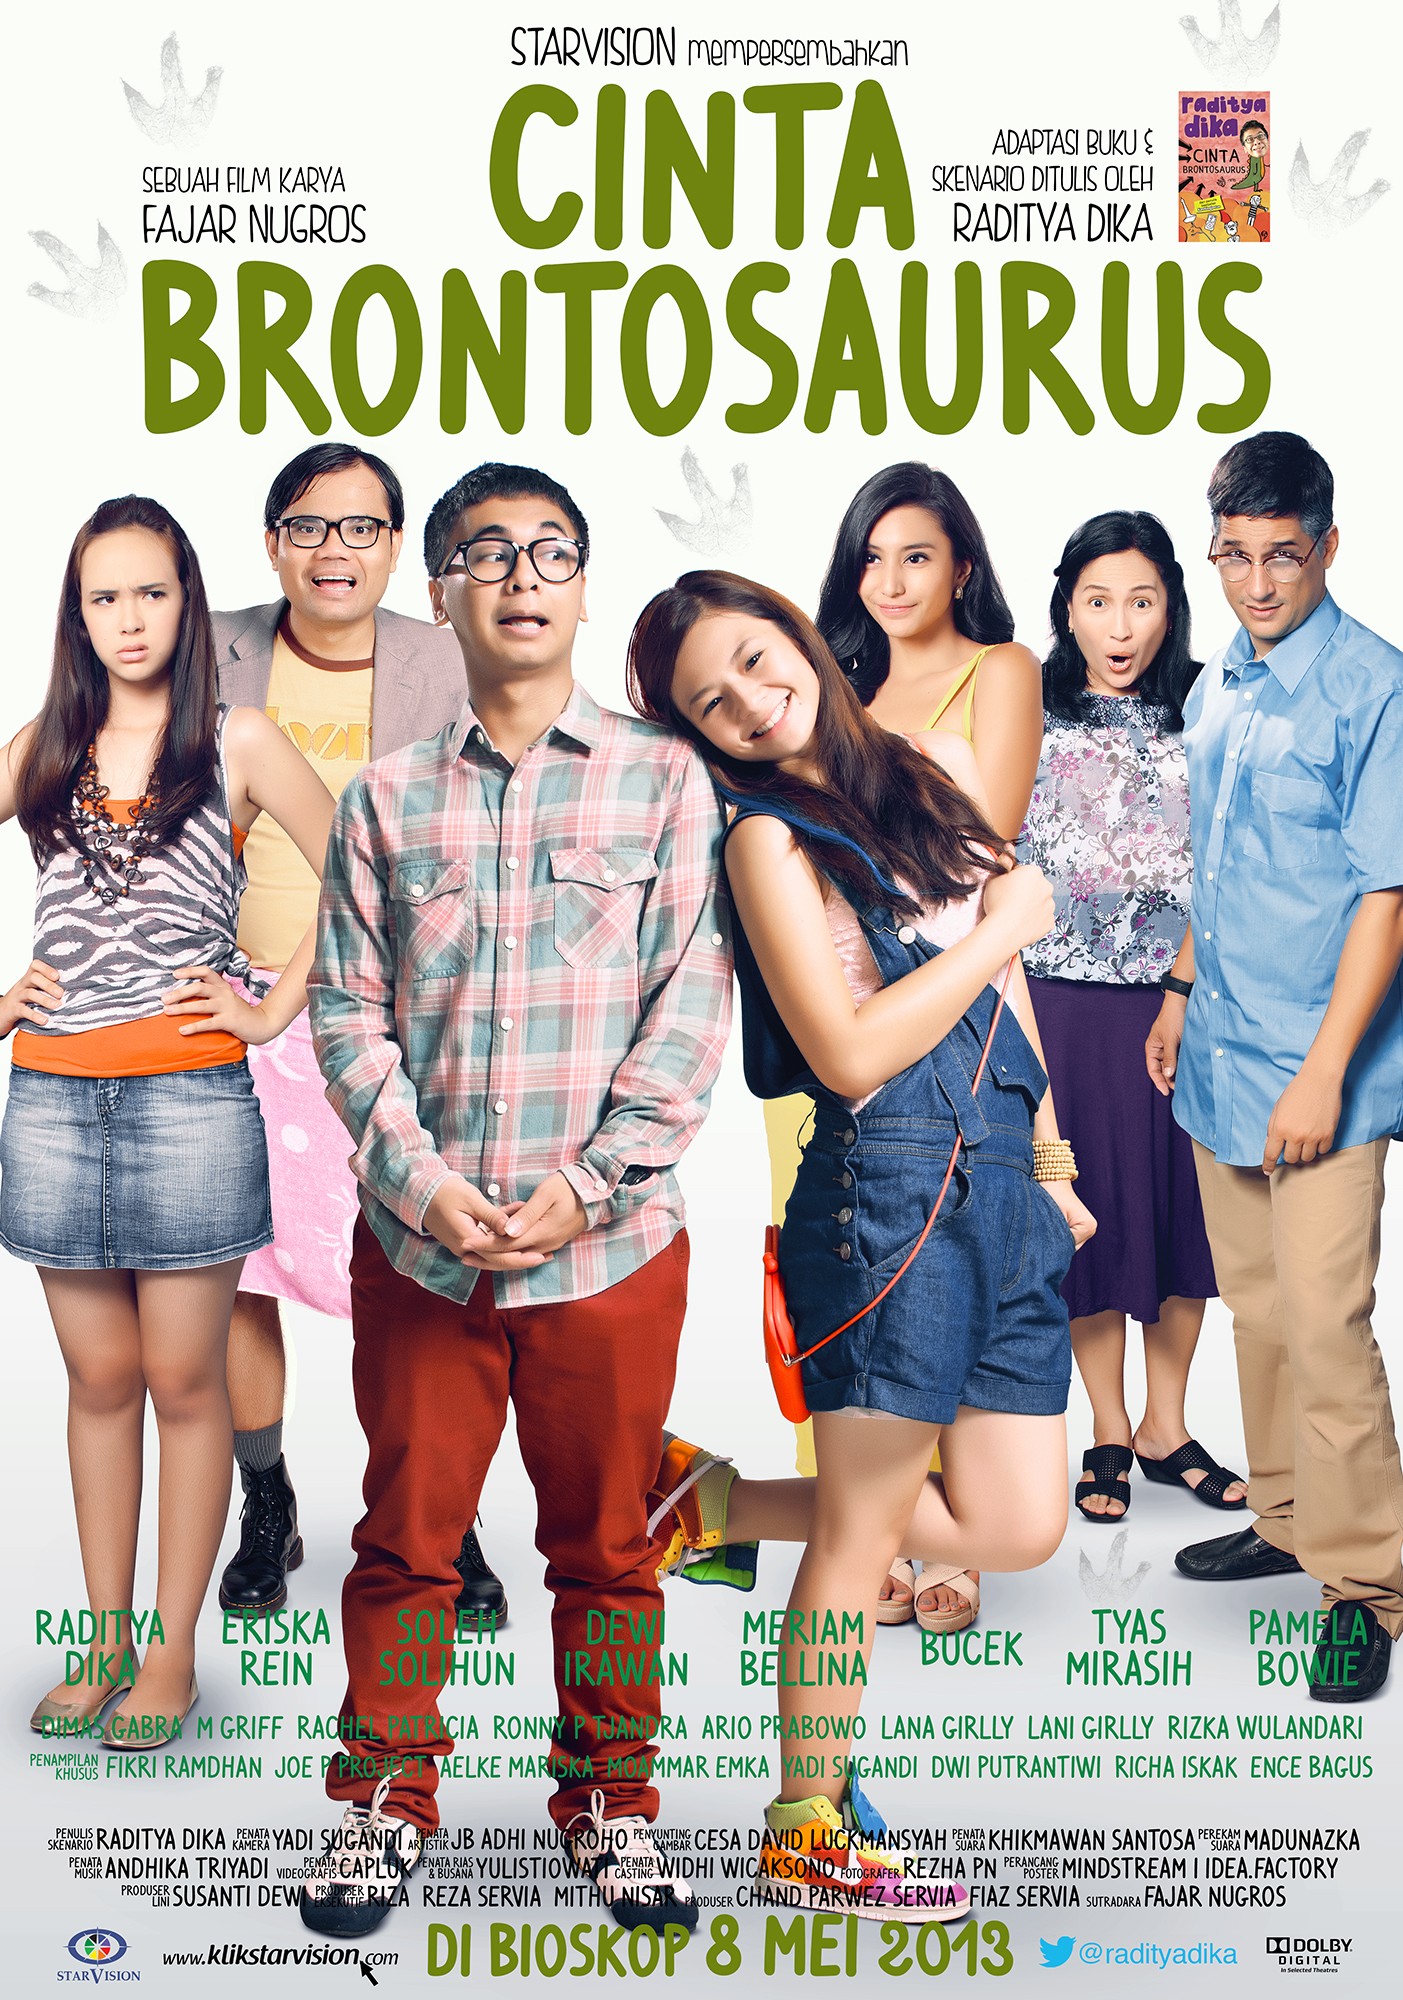 Mega Sized Movie Poster Image for Cinta Brontosaurus (#2 of 2)